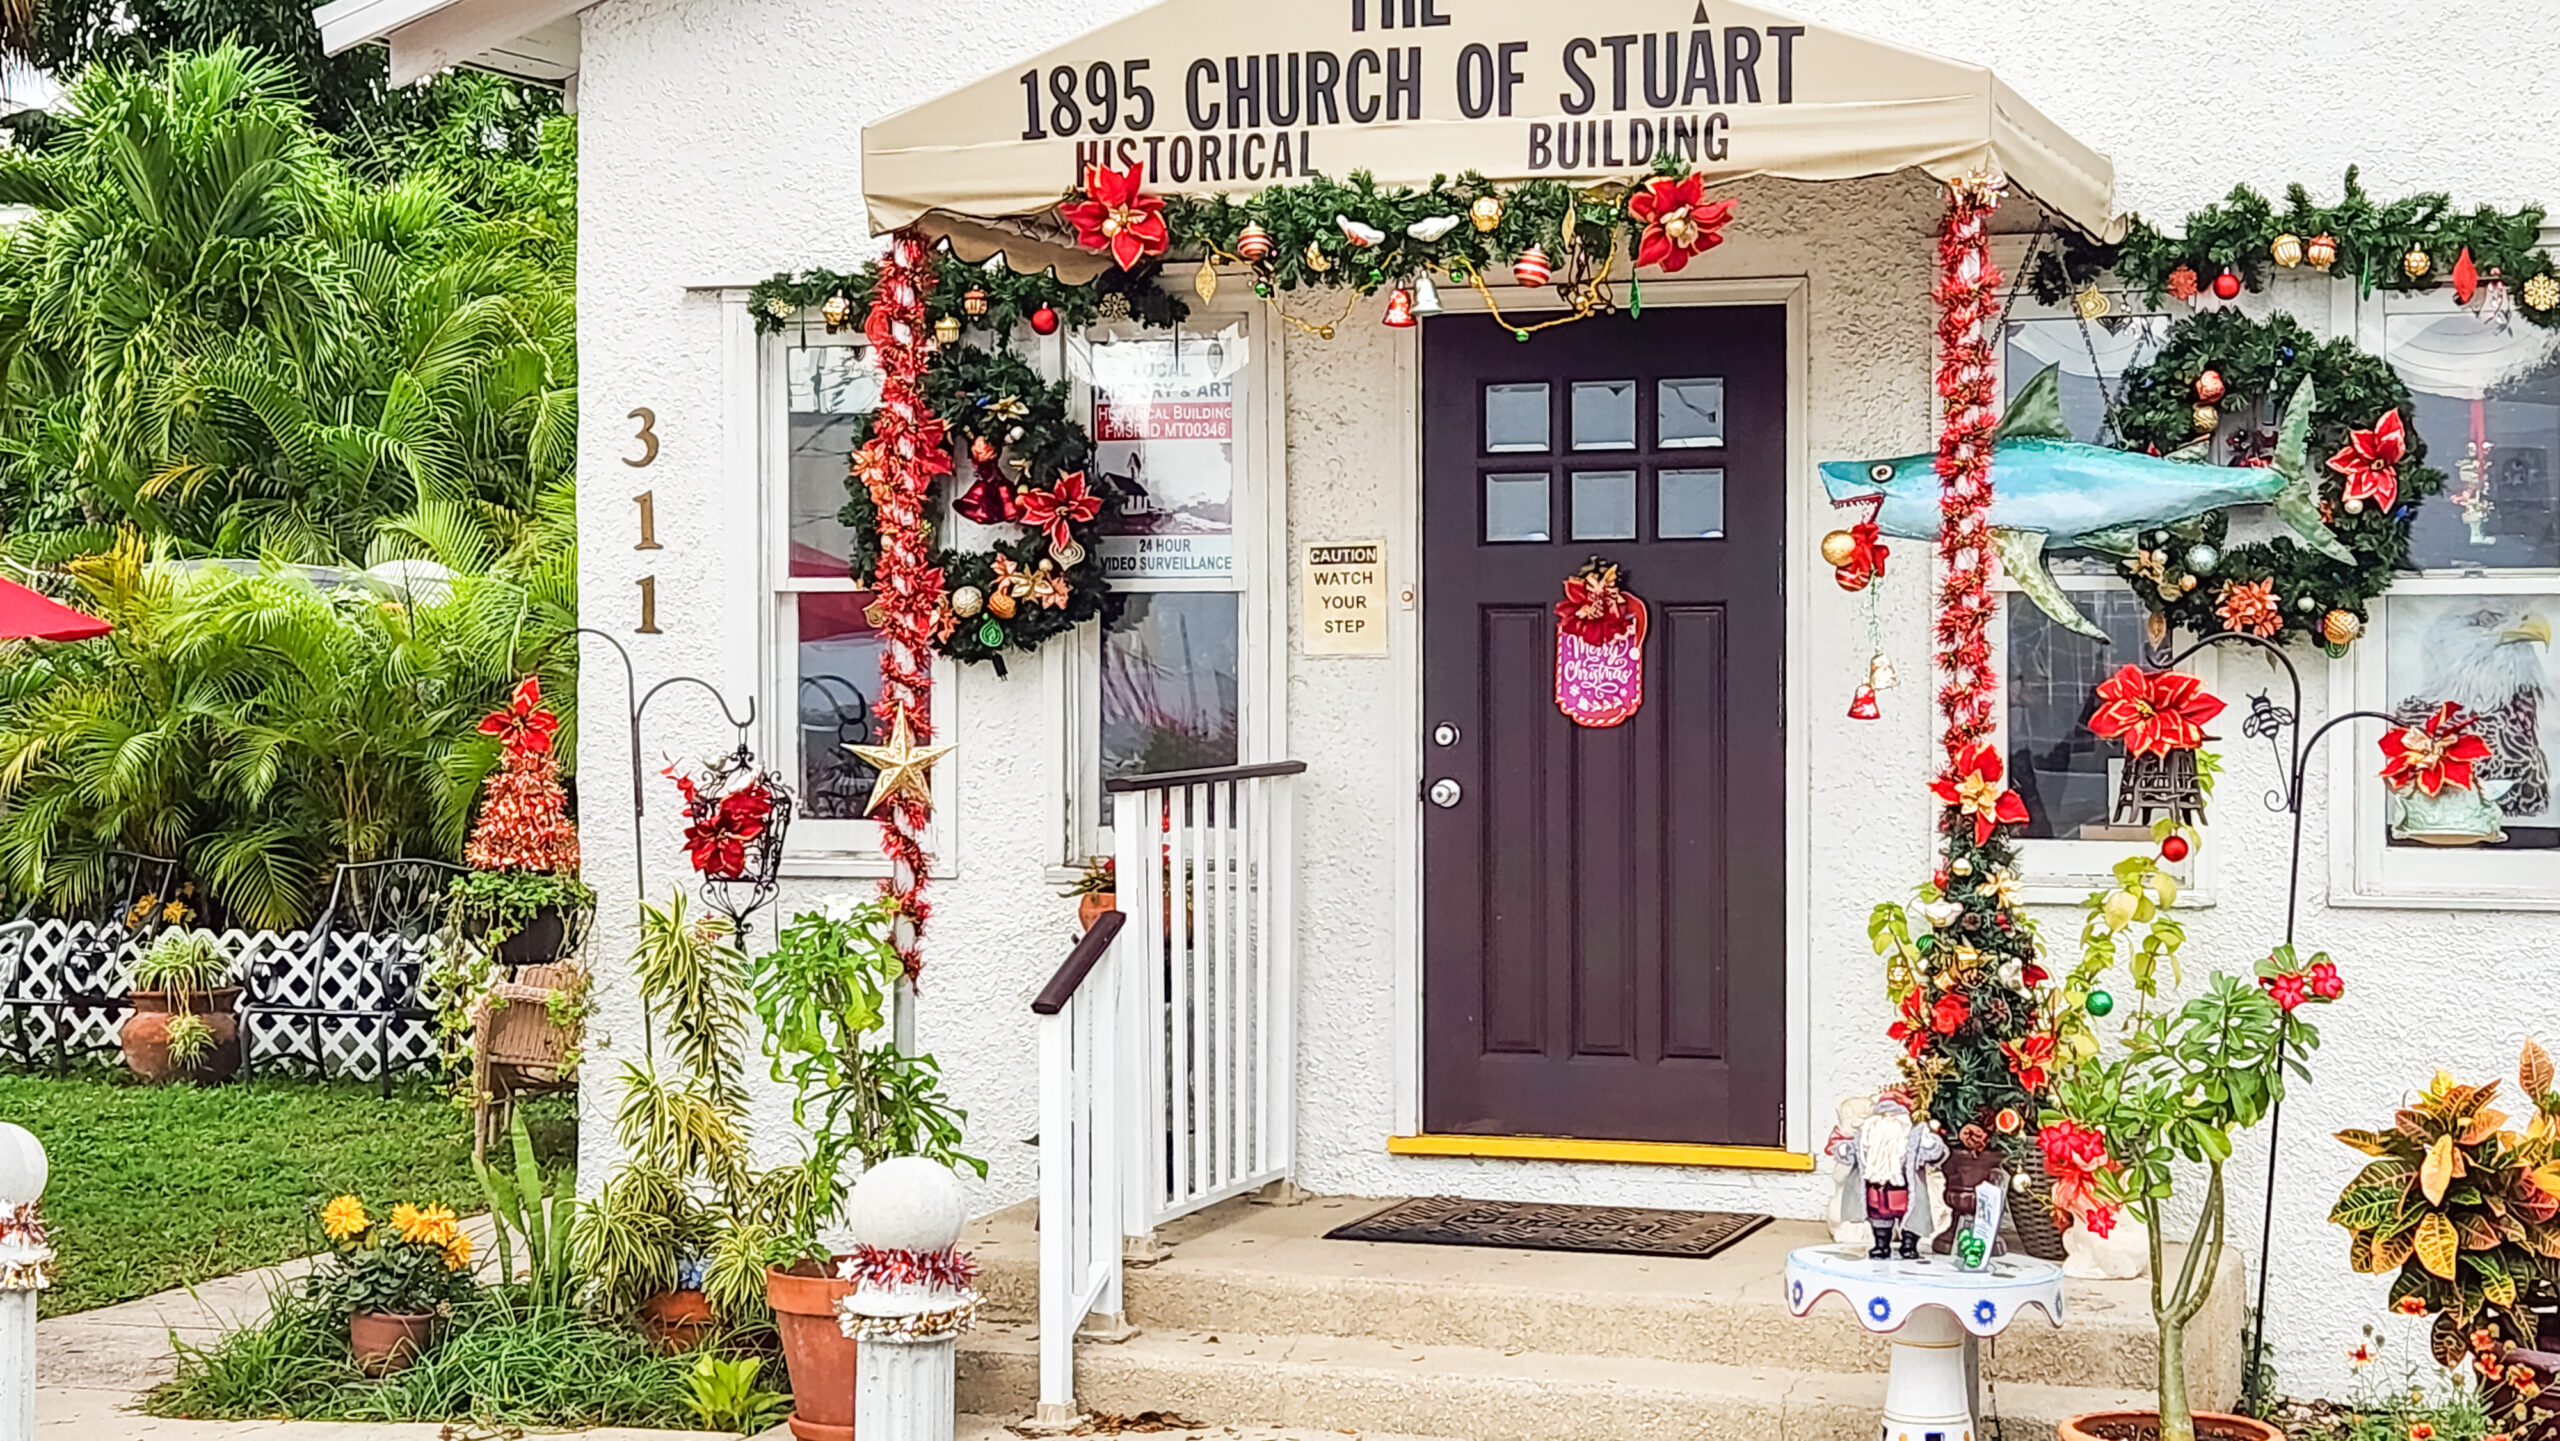 The 1895 Church of StuArt, Historical Building, Fine Art For Sale, Downtown Stuart, Martin County, Florida. Historic Heritage Preservation